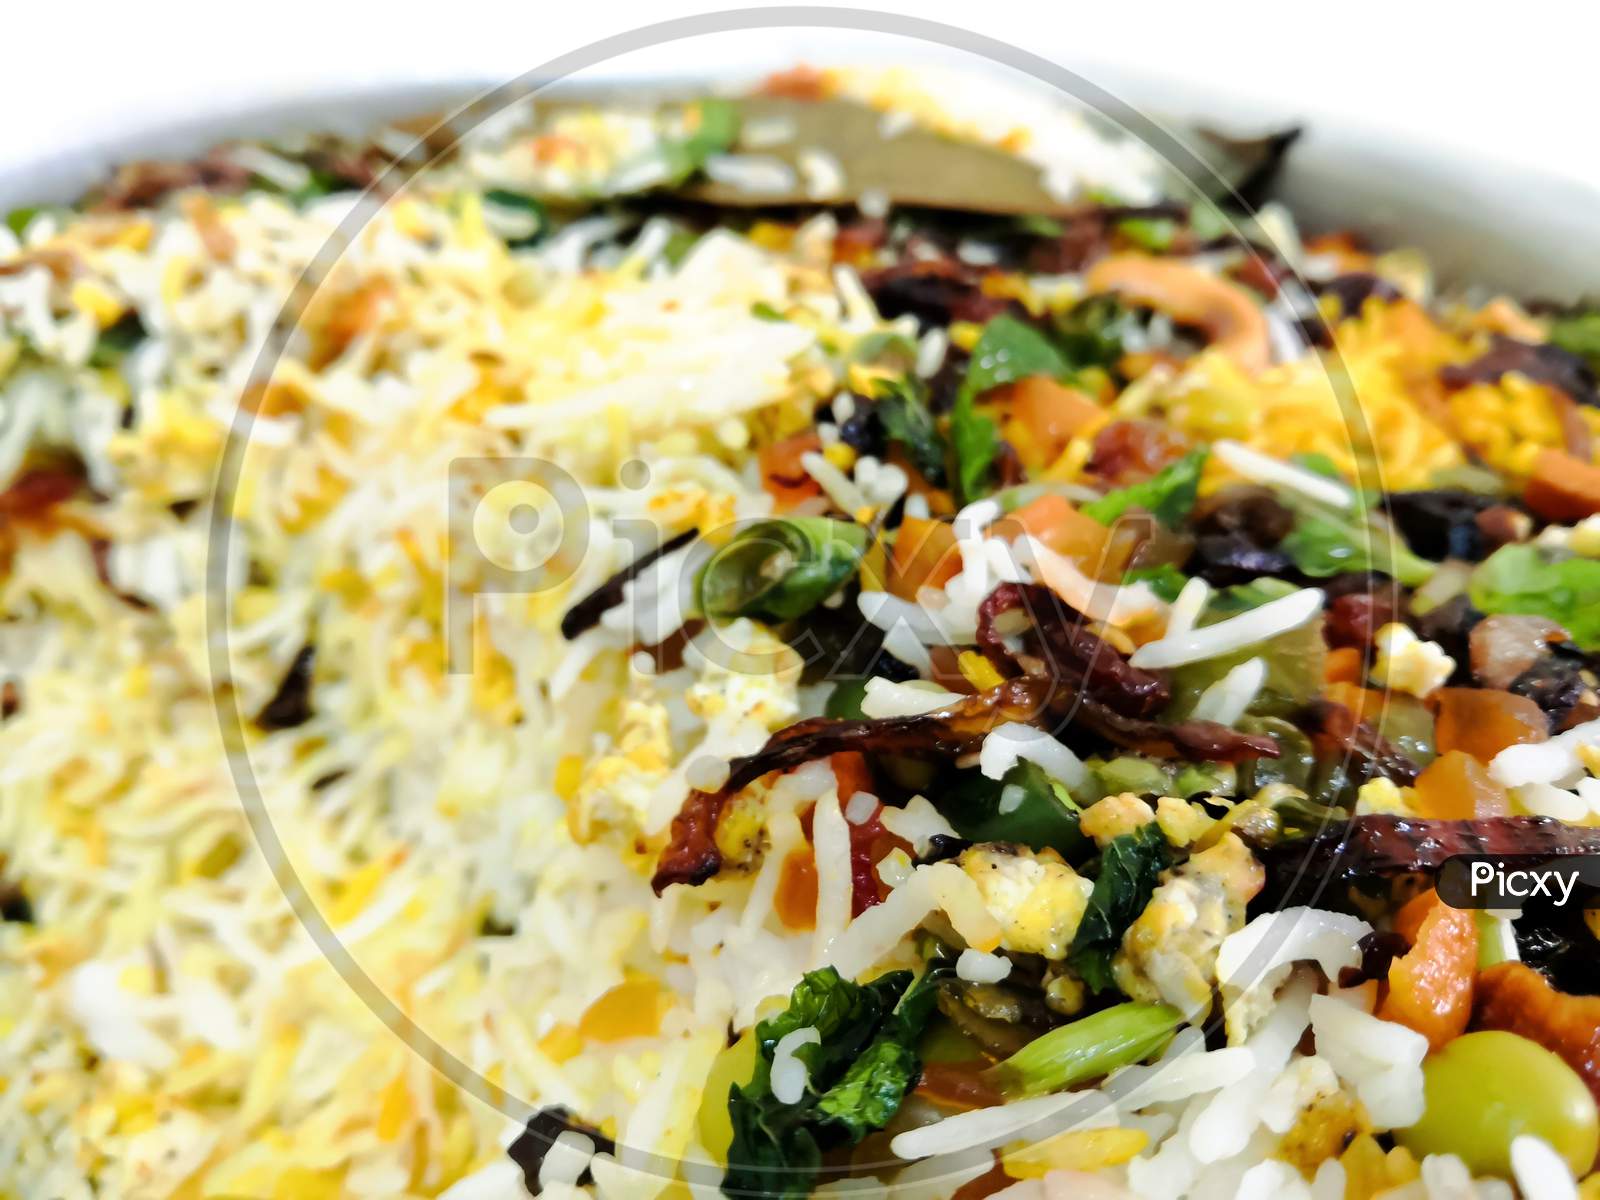 Kerala Style Tasty Vegetable Biryani Made With Basmati Rice. Selective Focus